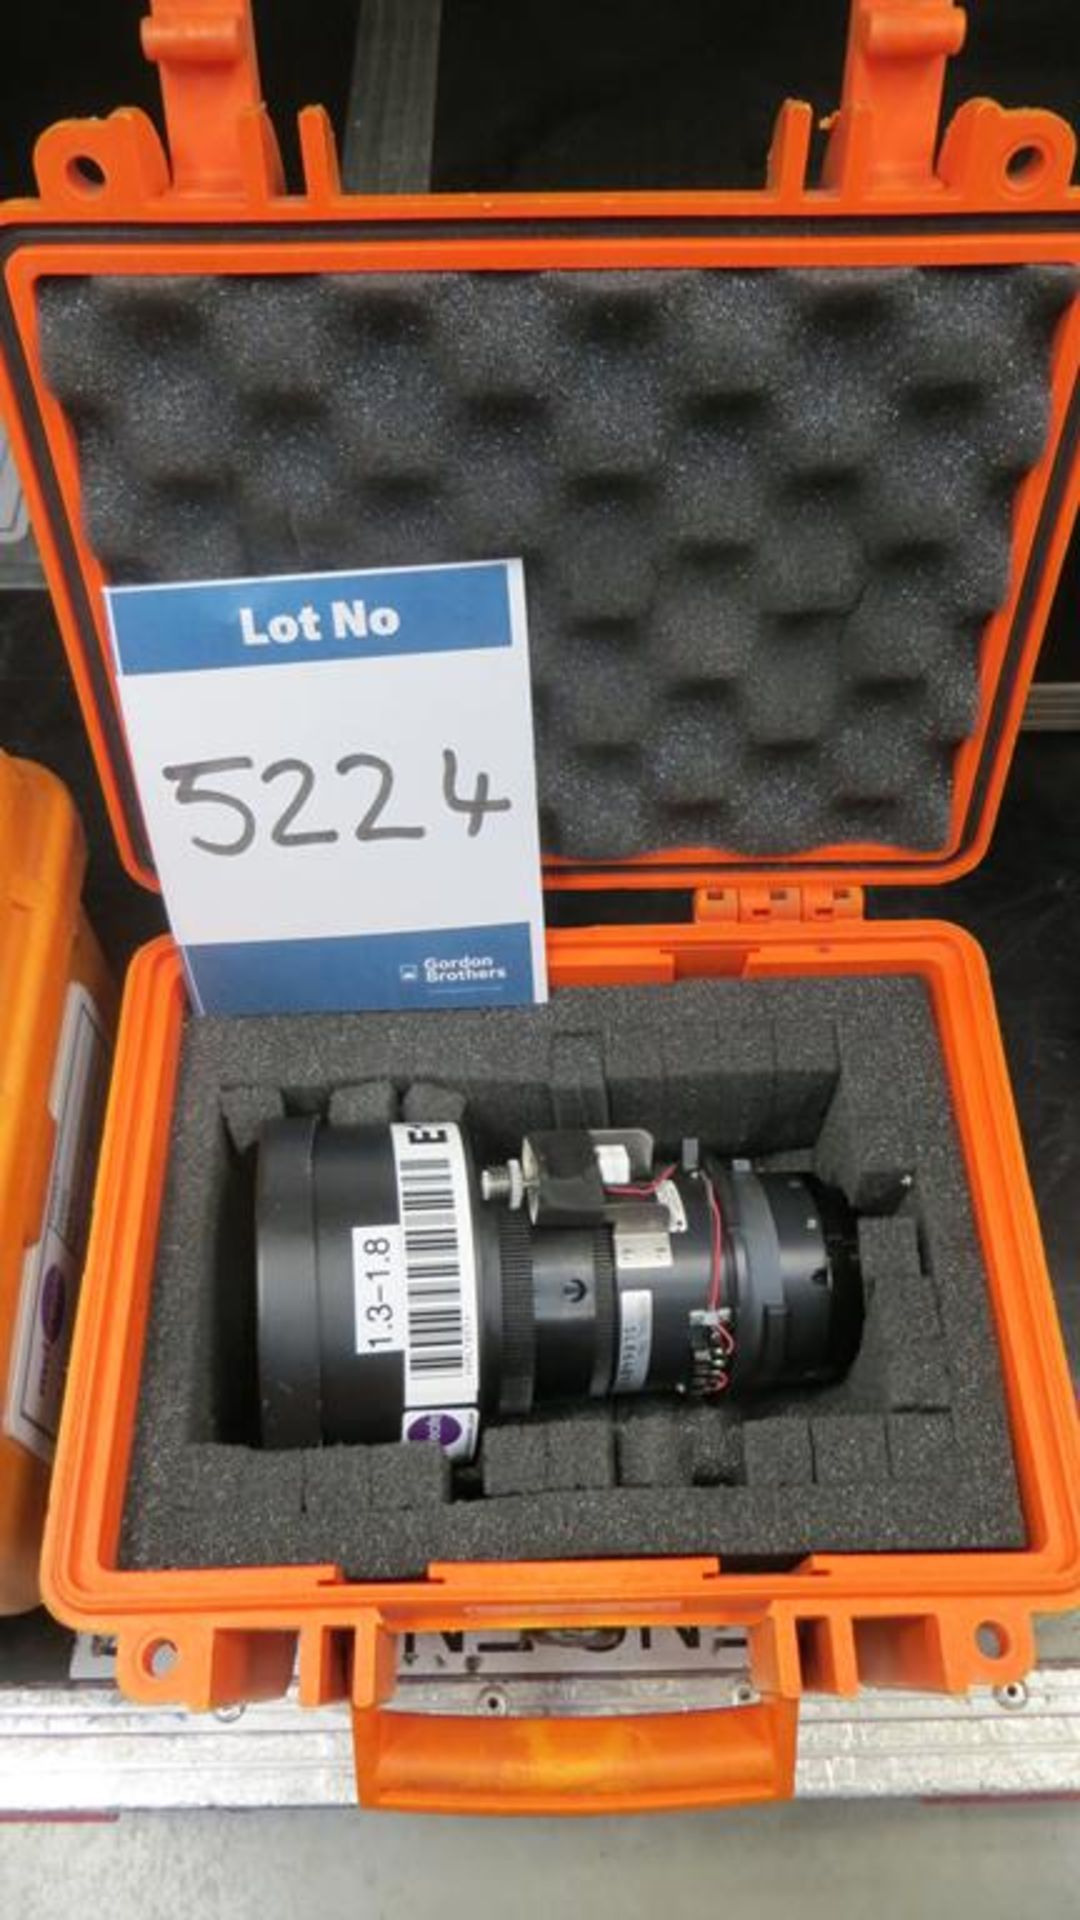 Panasonic, DLE100 lens 1.3-1.8:1 in transit case: